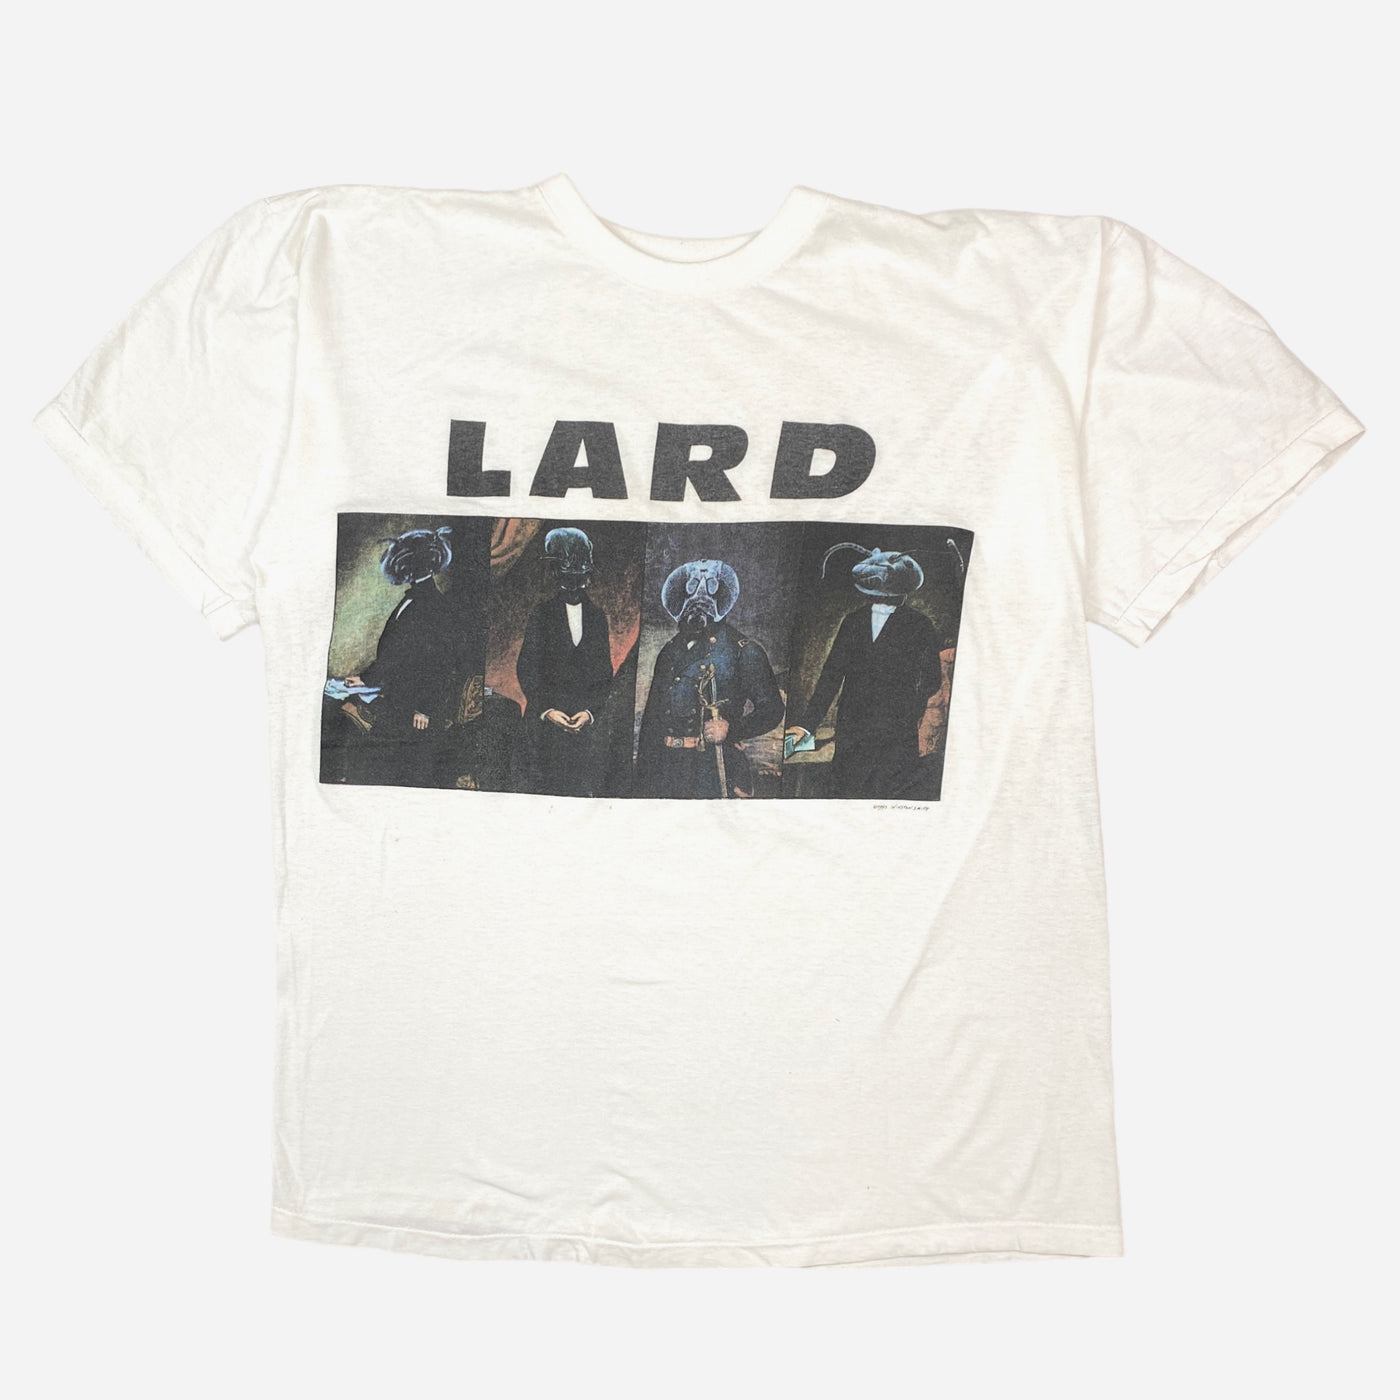 1990 LARD T-SHIRT